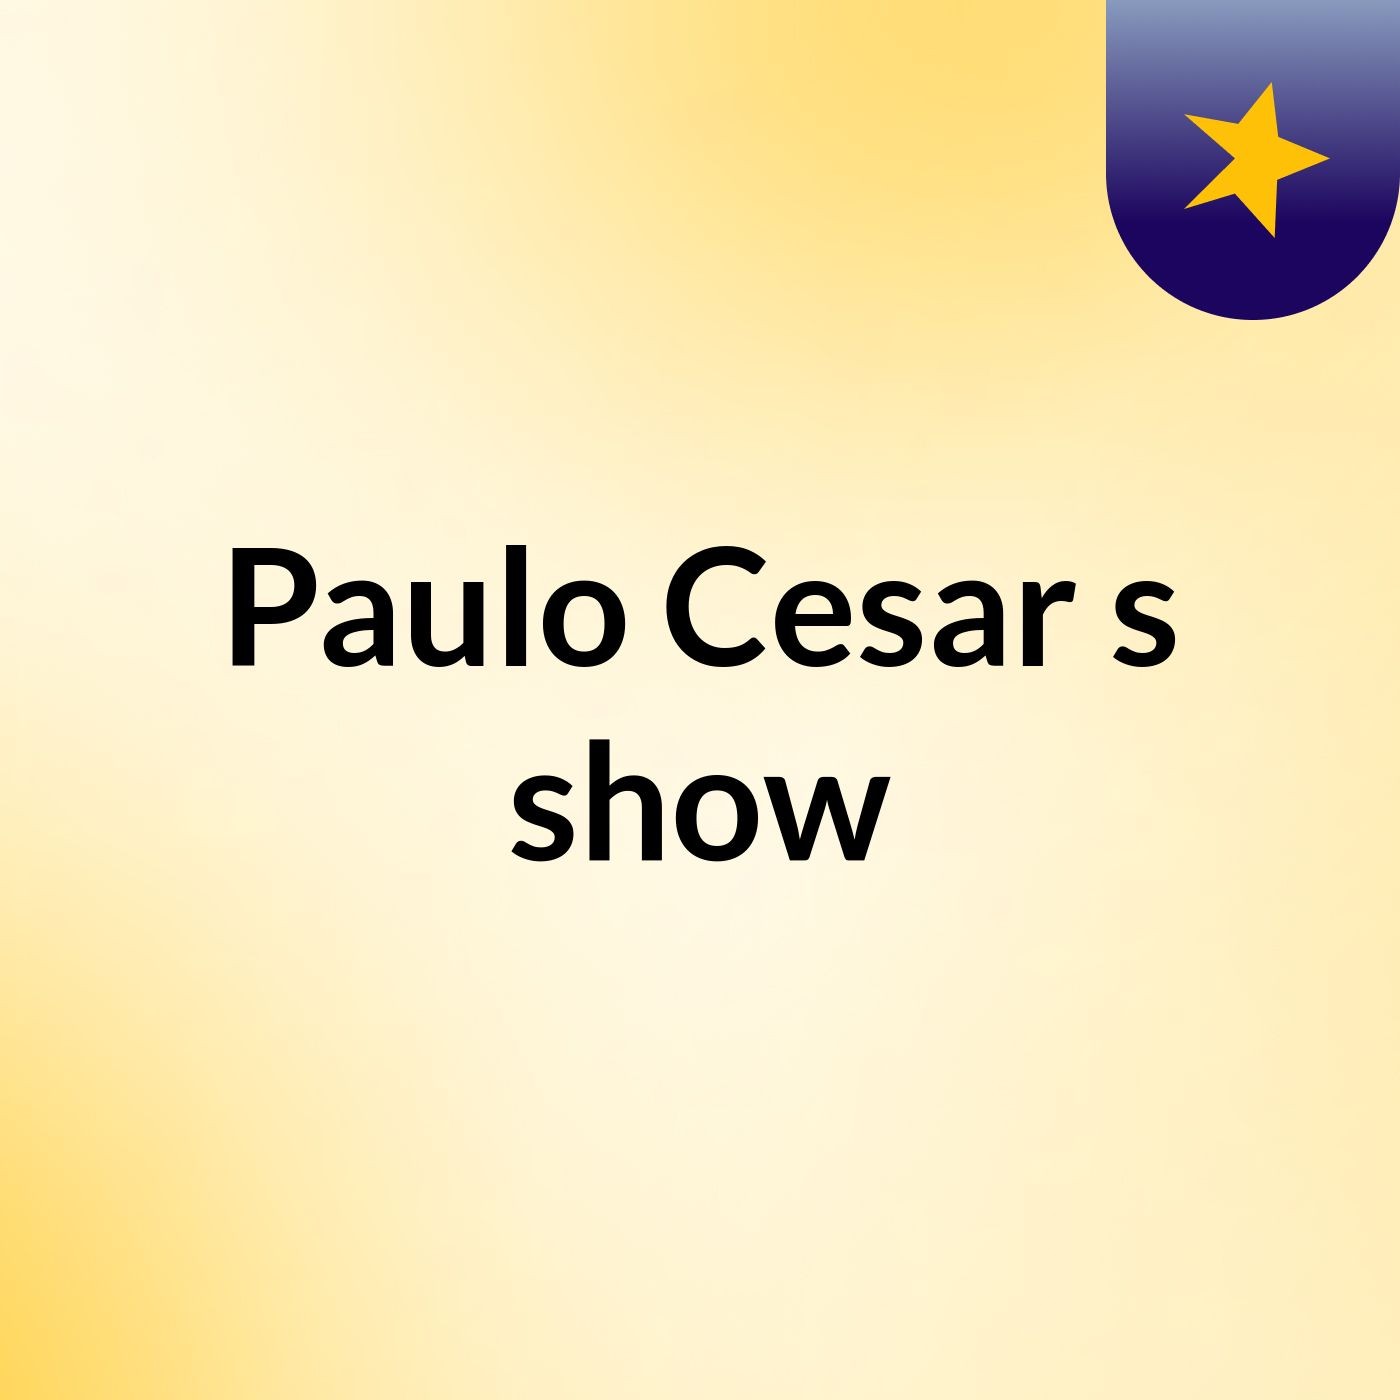 Paulo Cesar's show